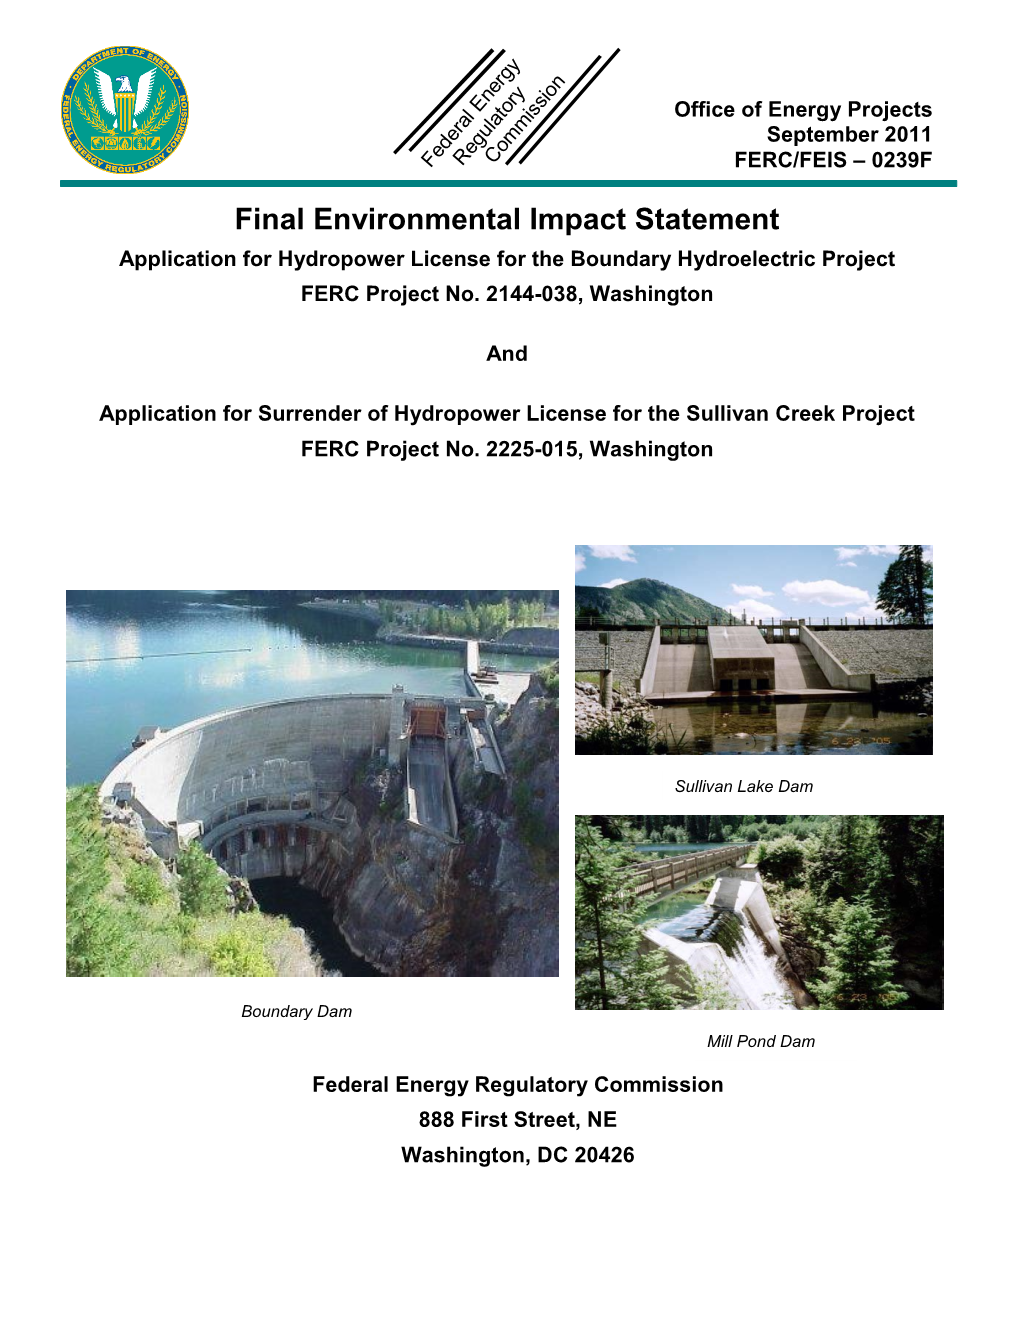 Environmental Impact Statement Template